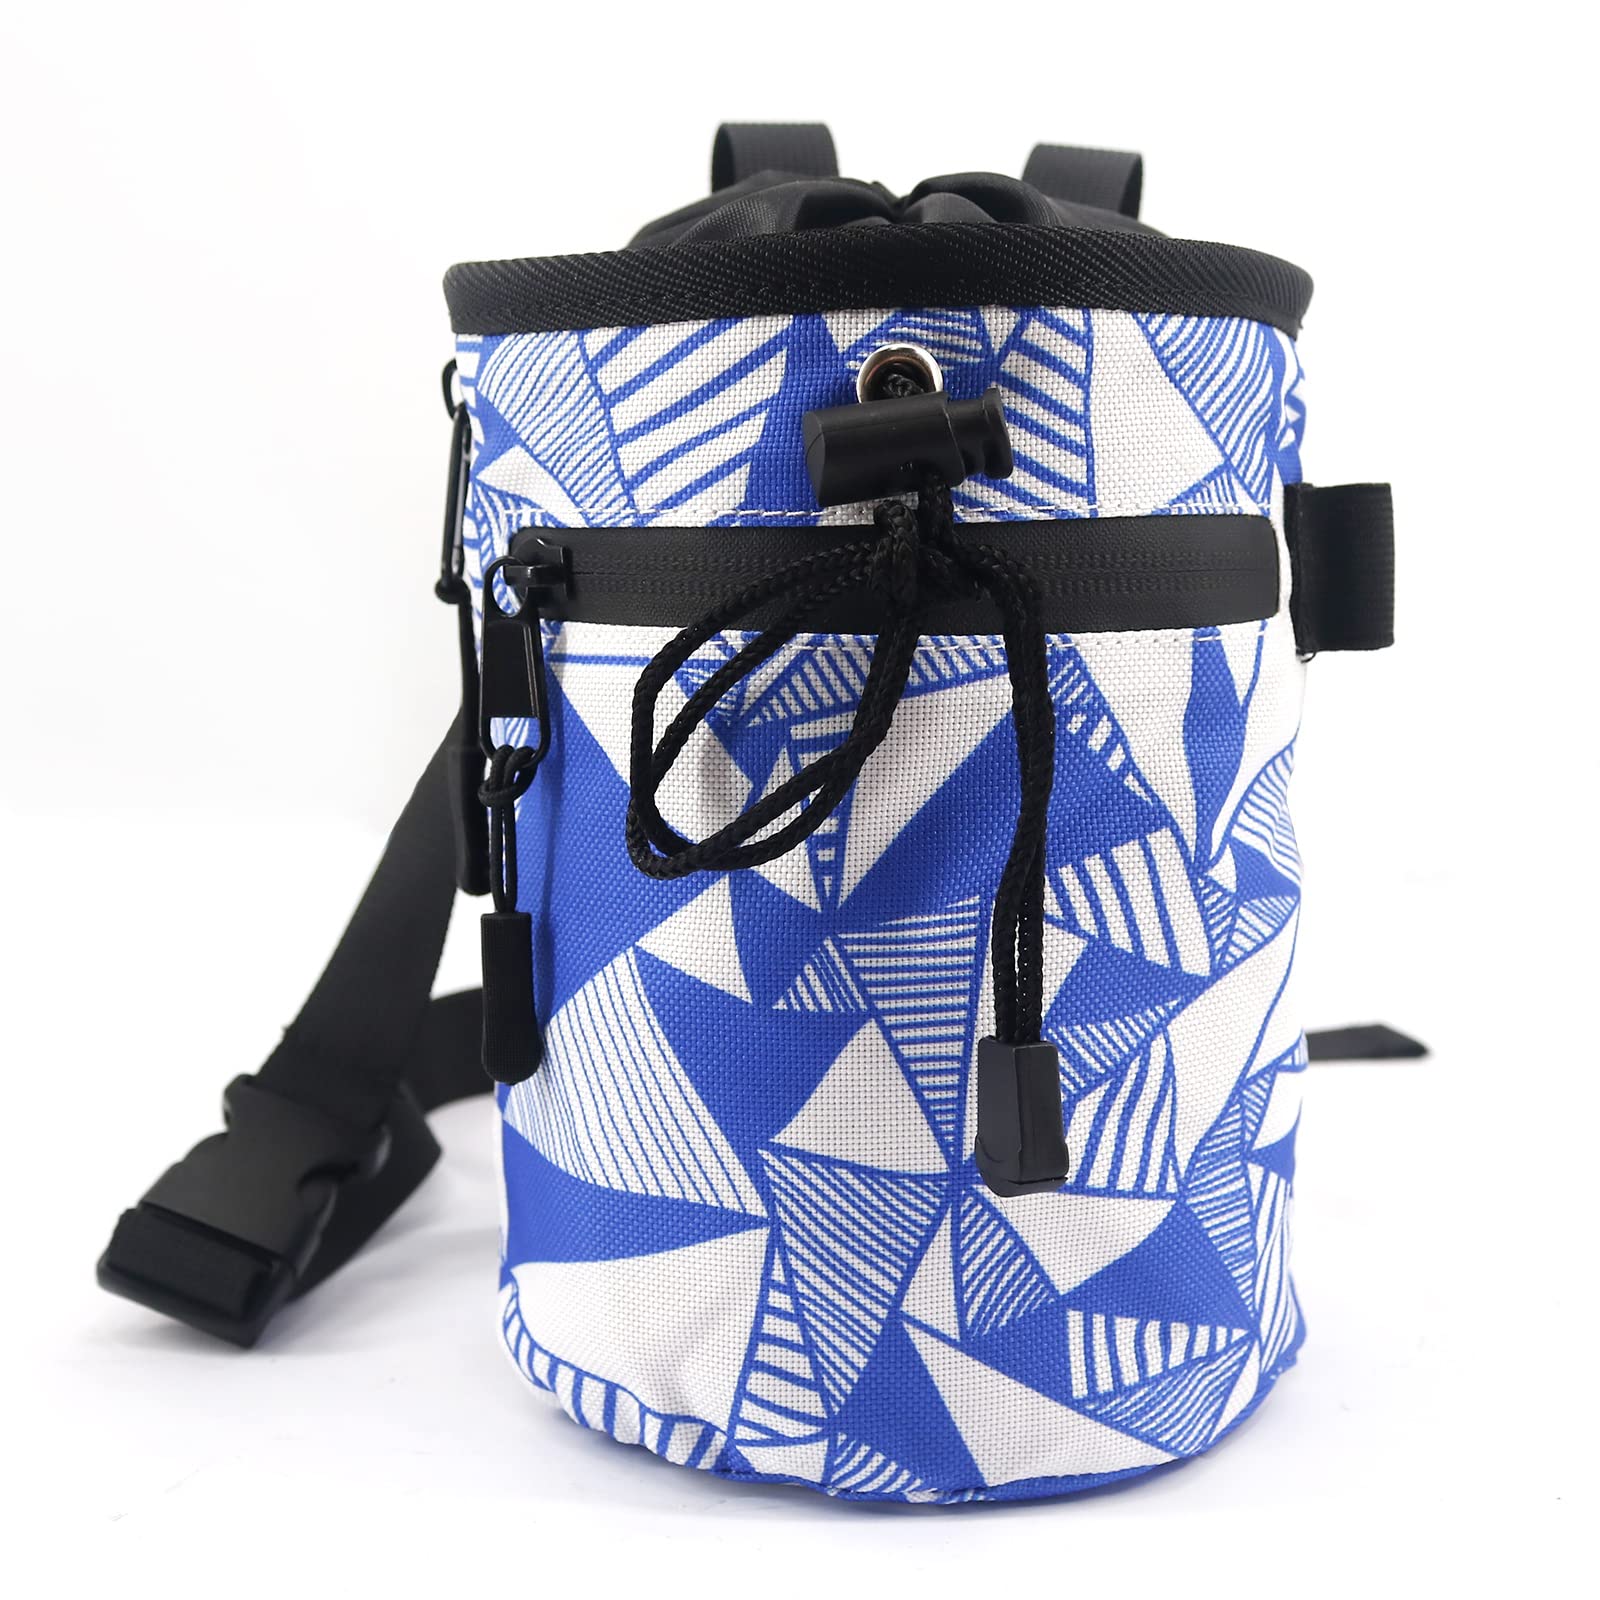 Waterproof Backpack or Climbing Bag | dragoyle.com